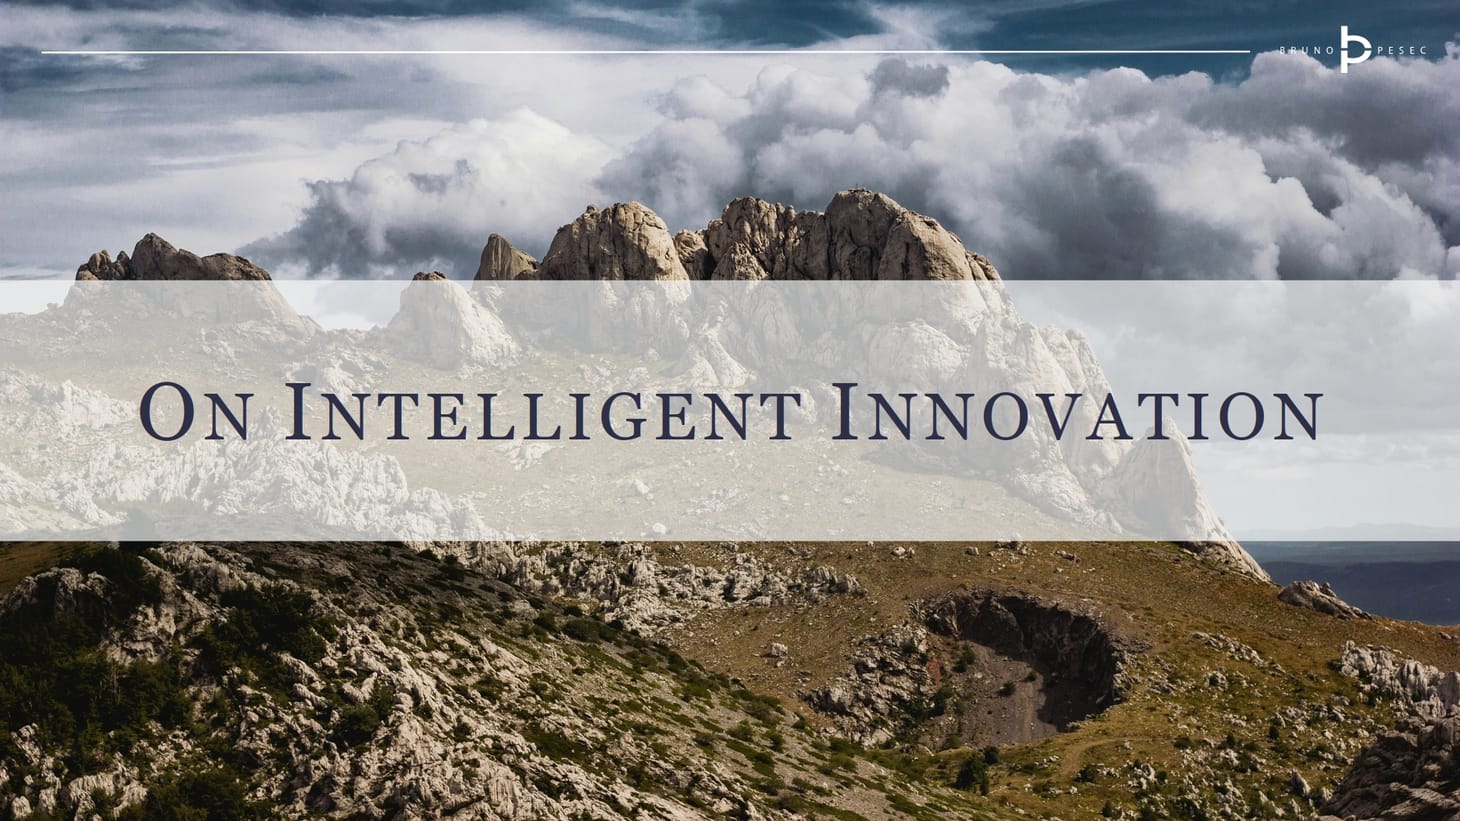 On intelligent innovation